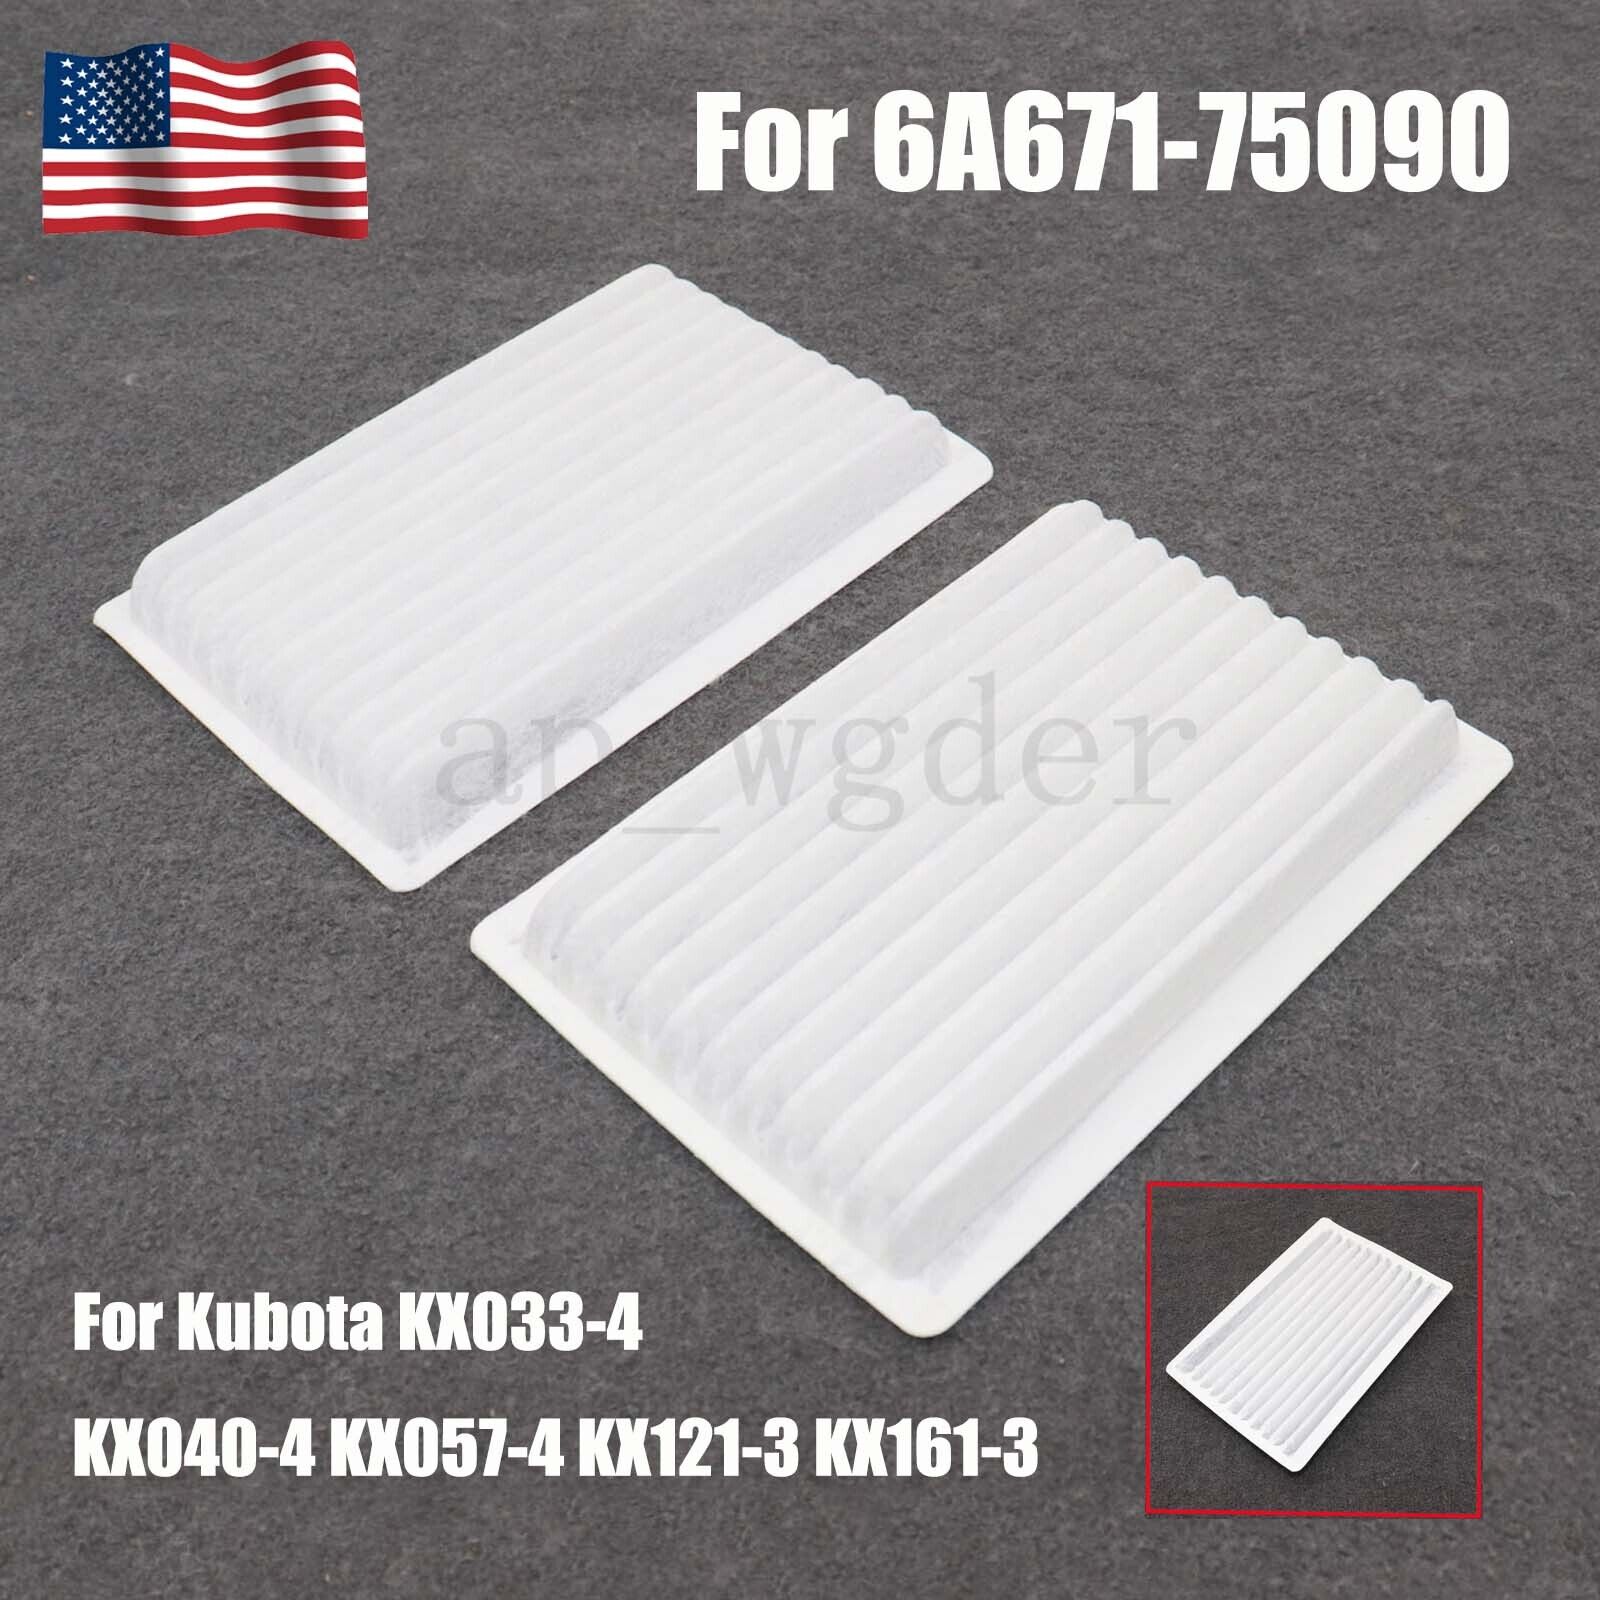 2X Air Filter Kit For Kubota KX033-4 KX040-4 KX057-4 KX121-3 KX161-3 6A671-75090